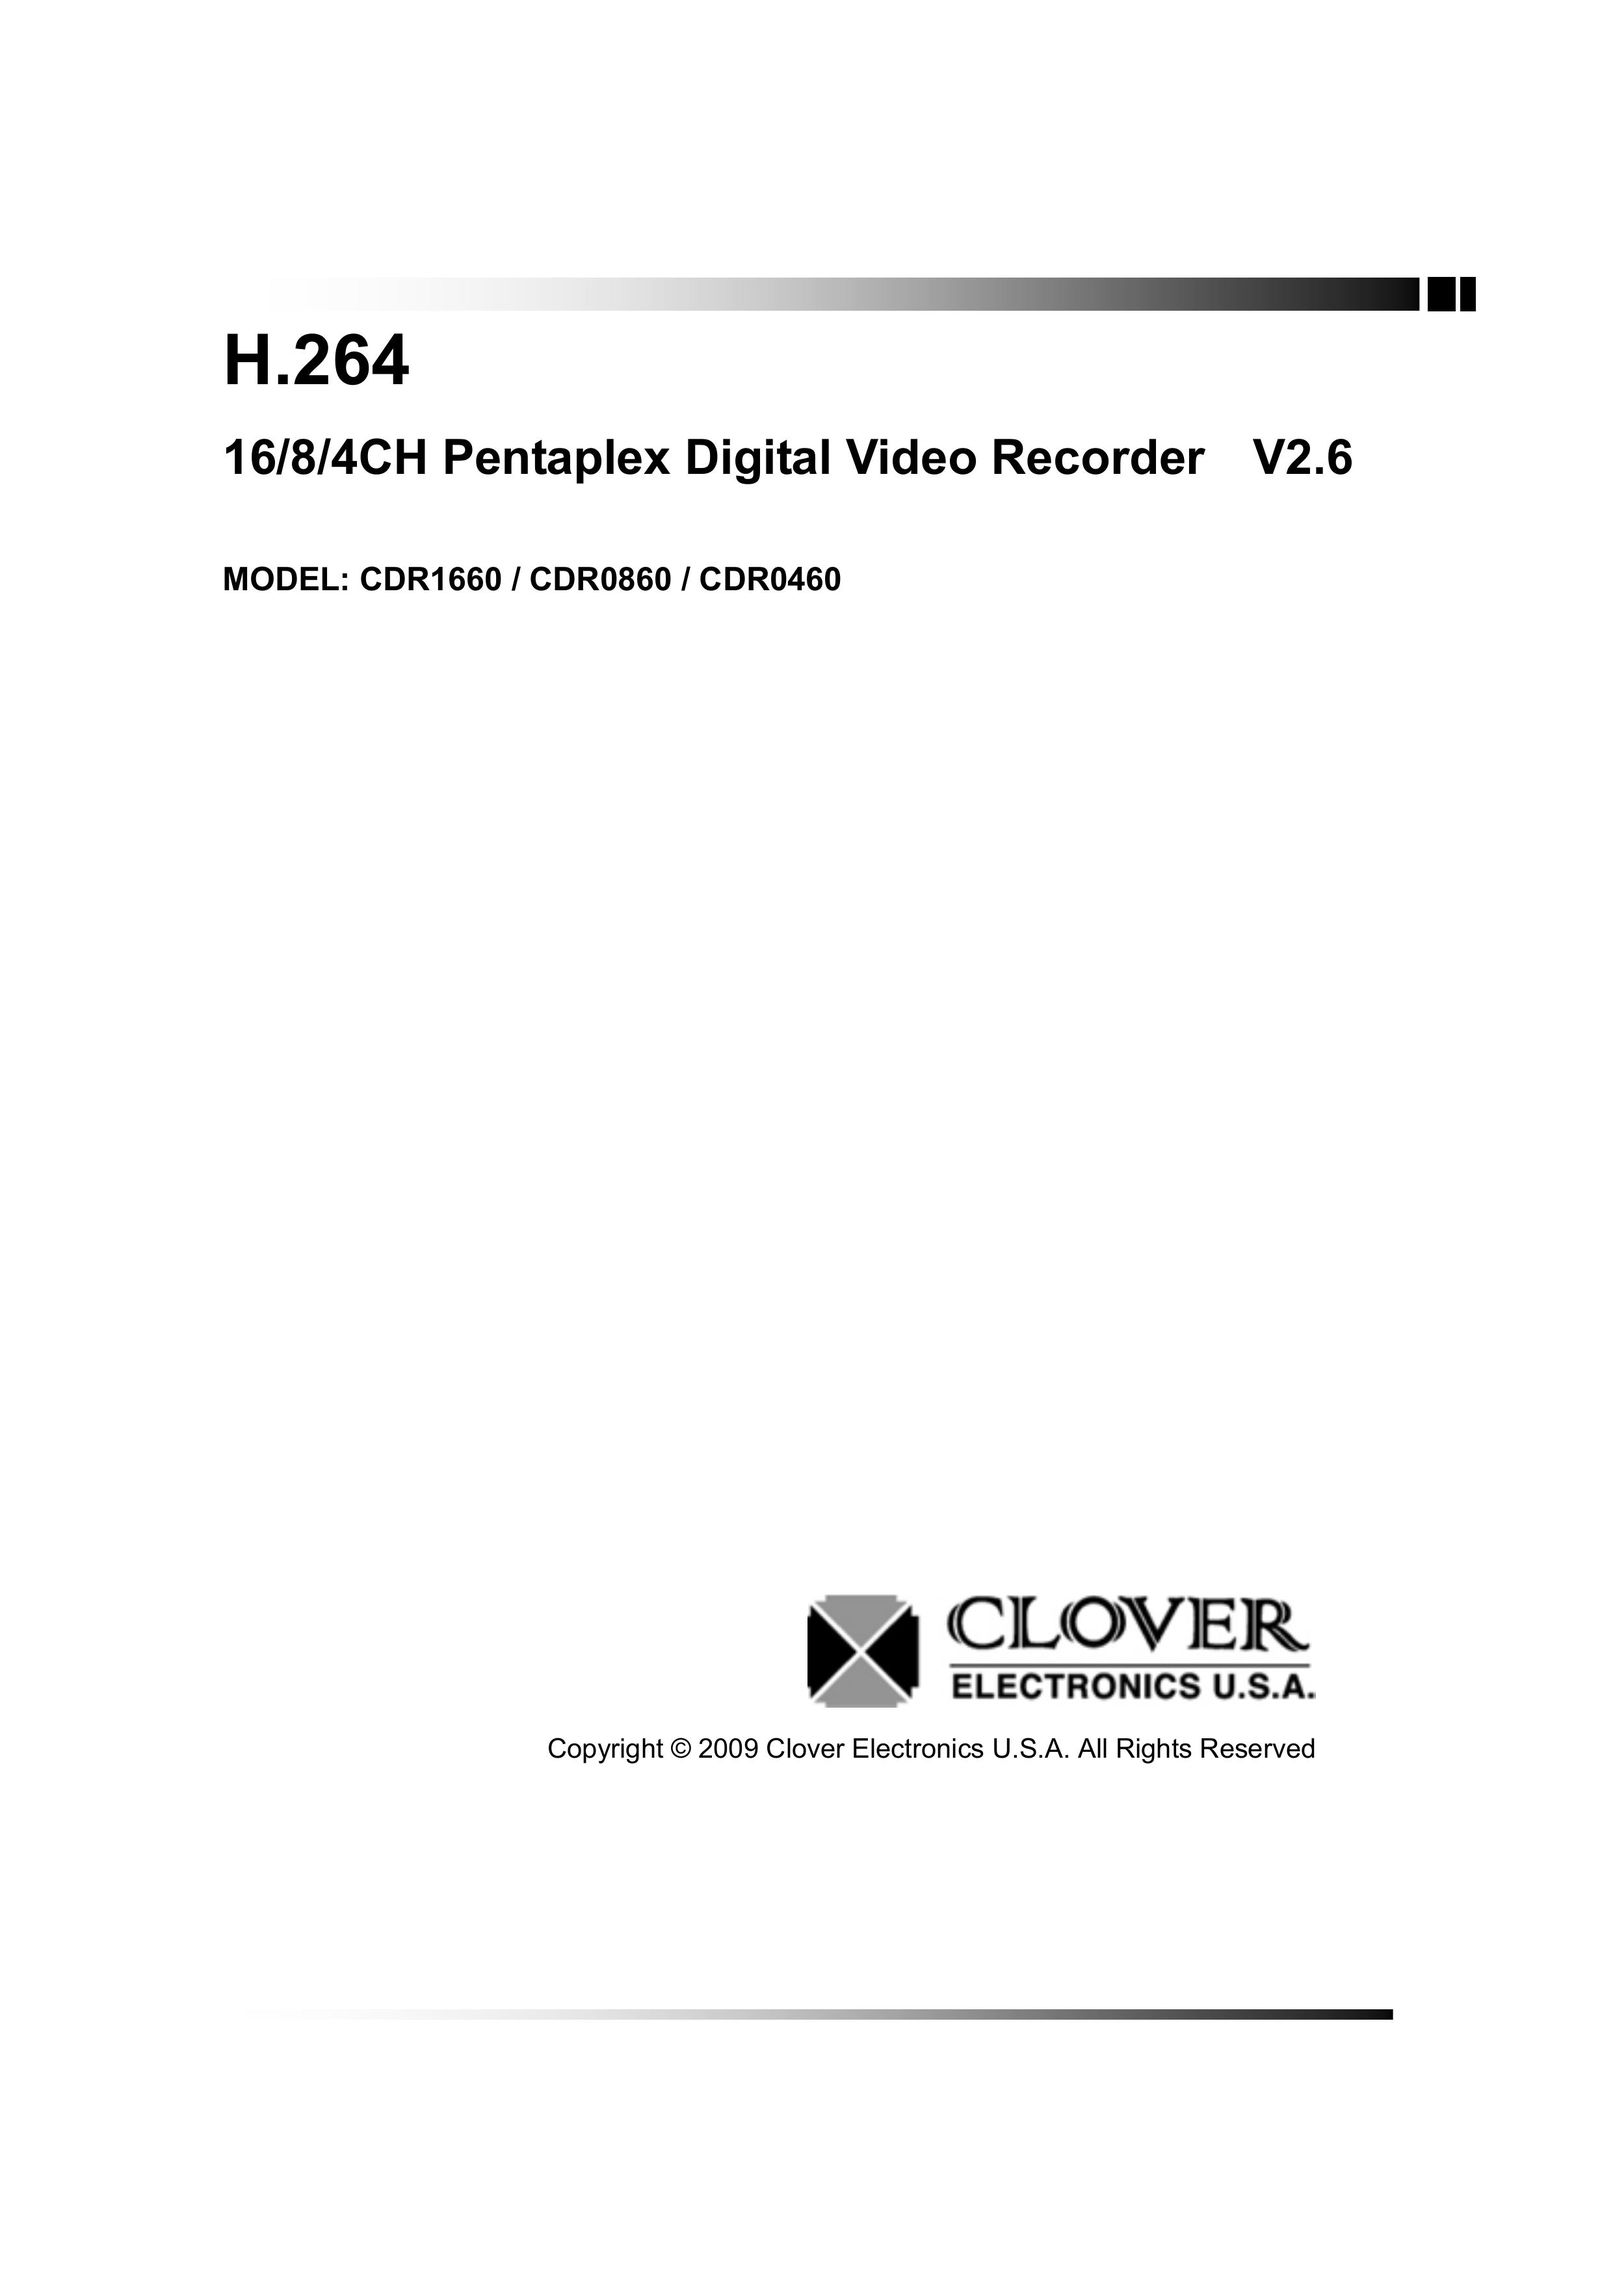 Clover Electronics CDR0460 DVR User Manual